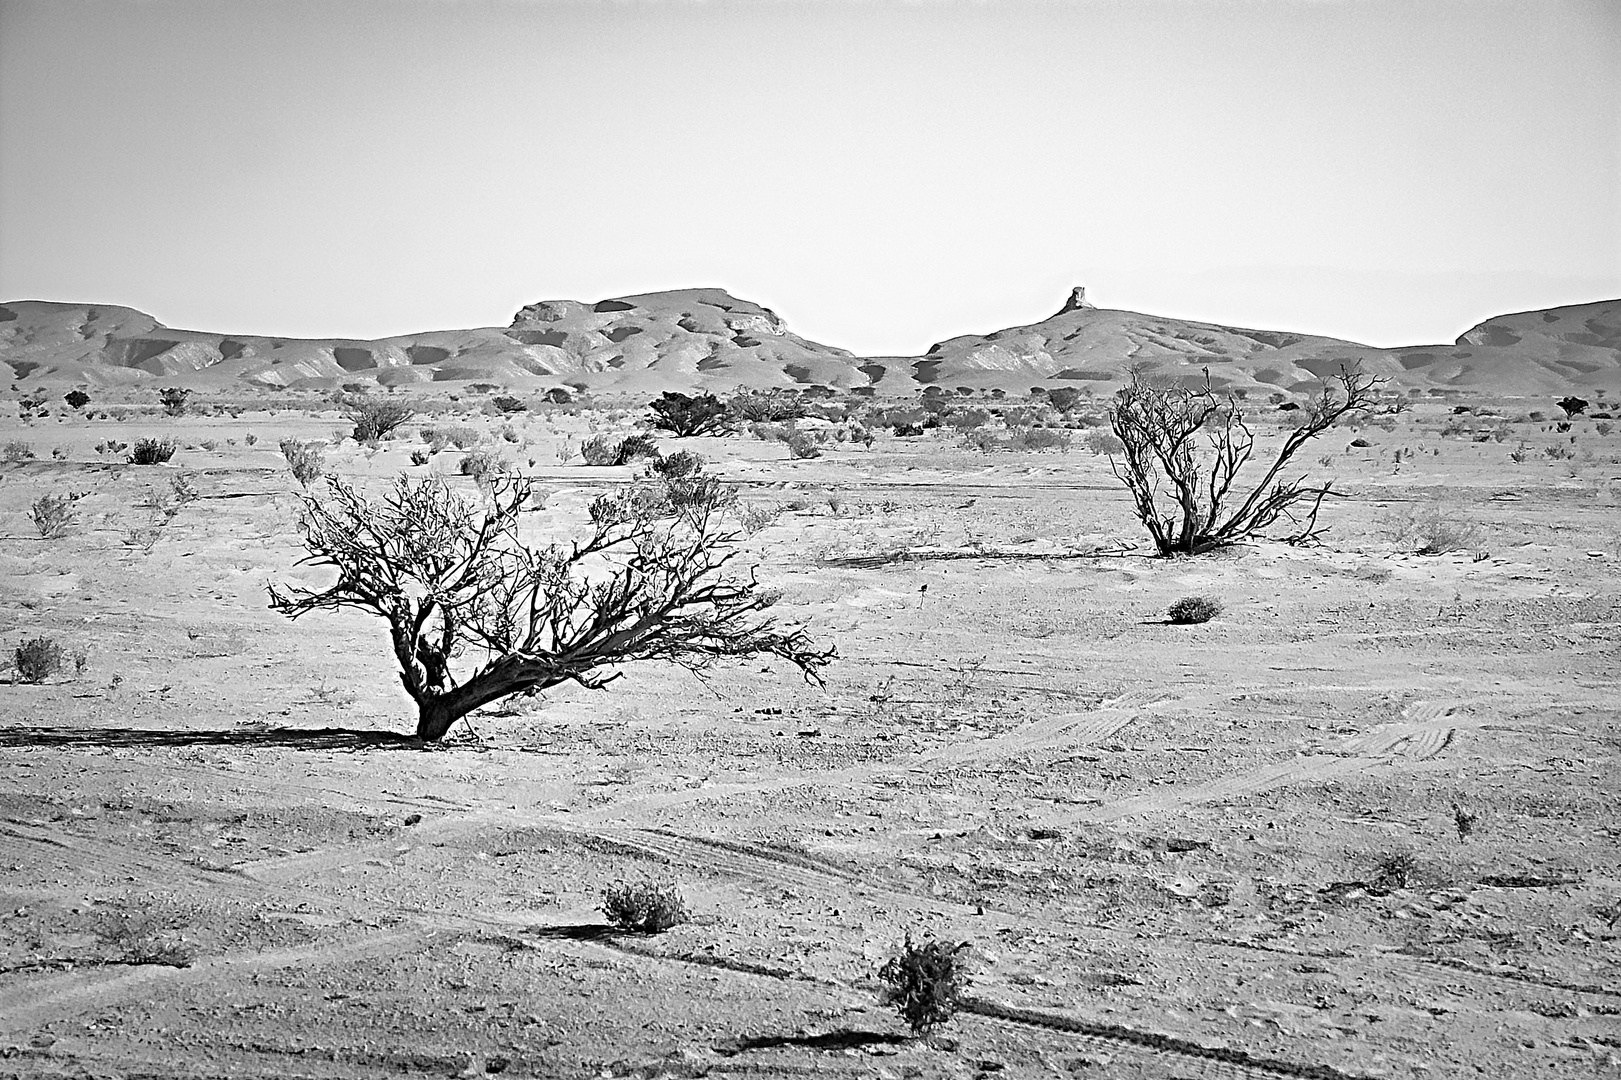 Oman desert near Ibri